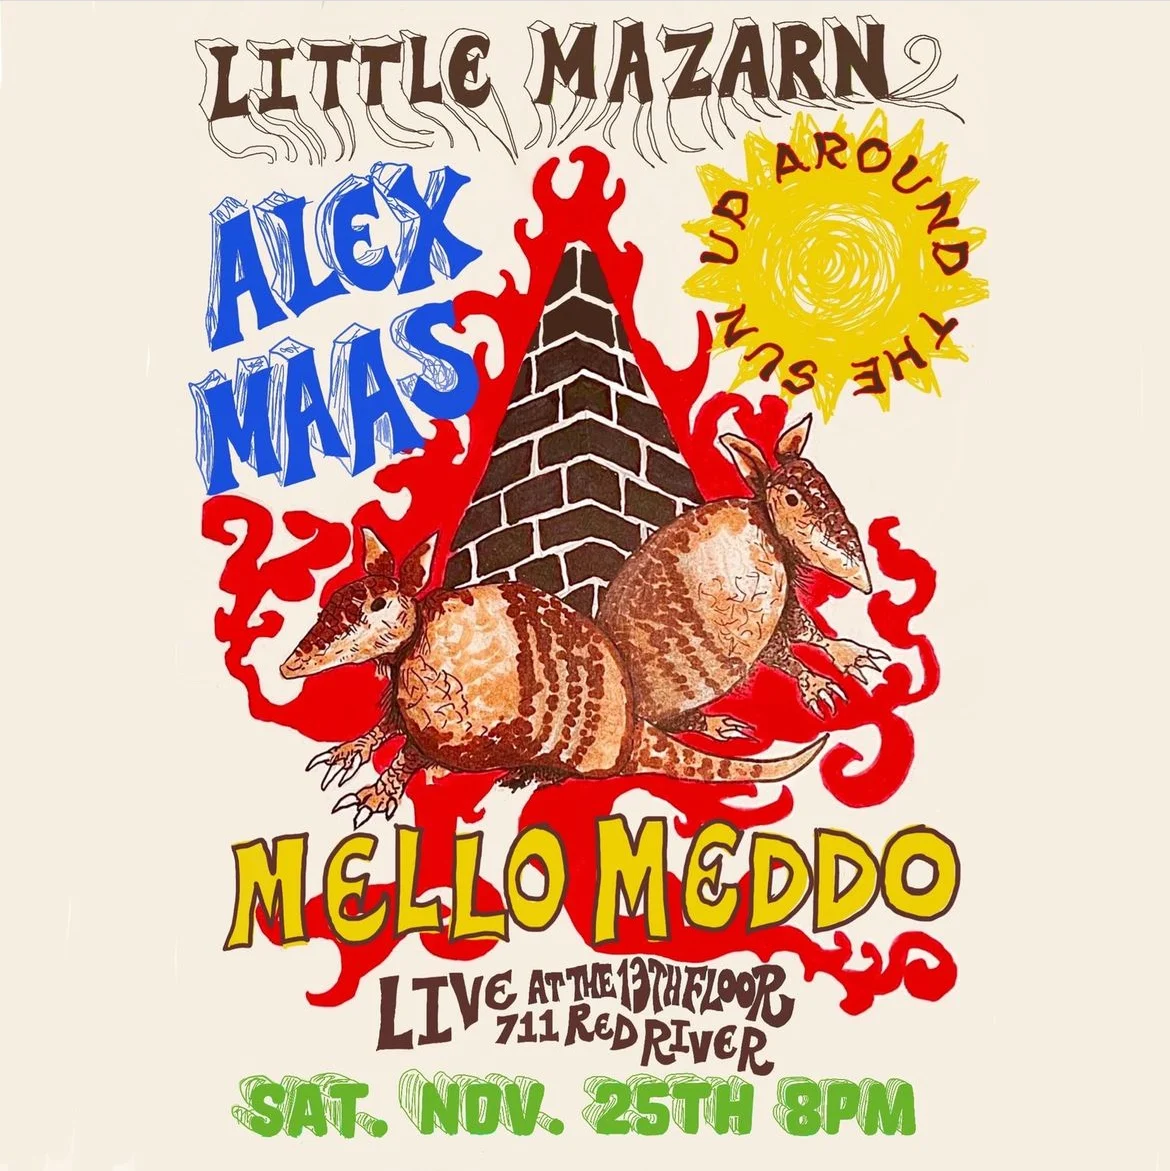 Little Mazarn, Up Around the Sun, Alex Maas, Mello Meddo at 13th Floor